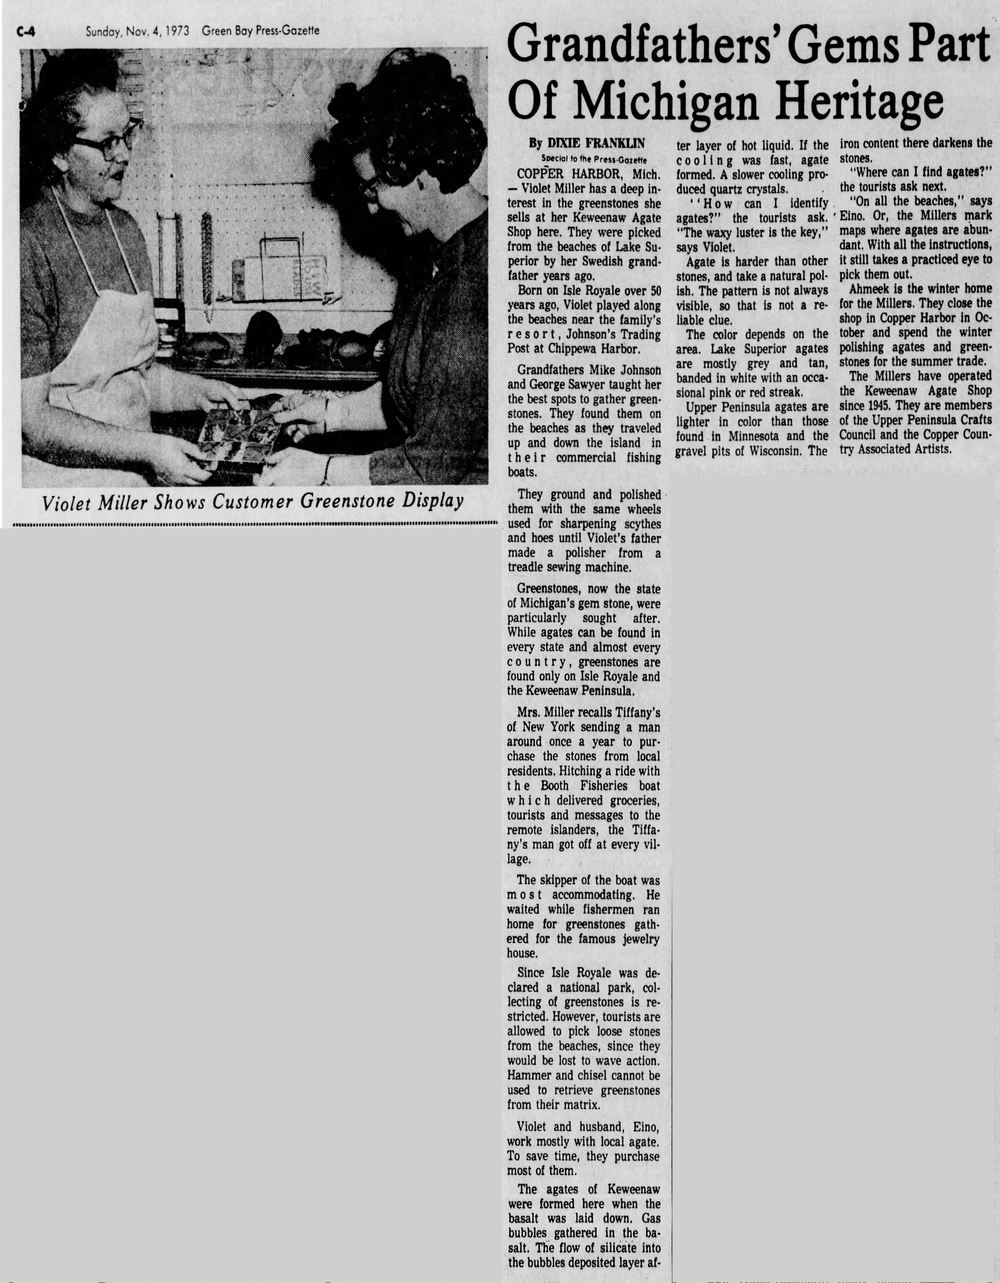 Keweenaw Agate Shop - November 4 1973 Article